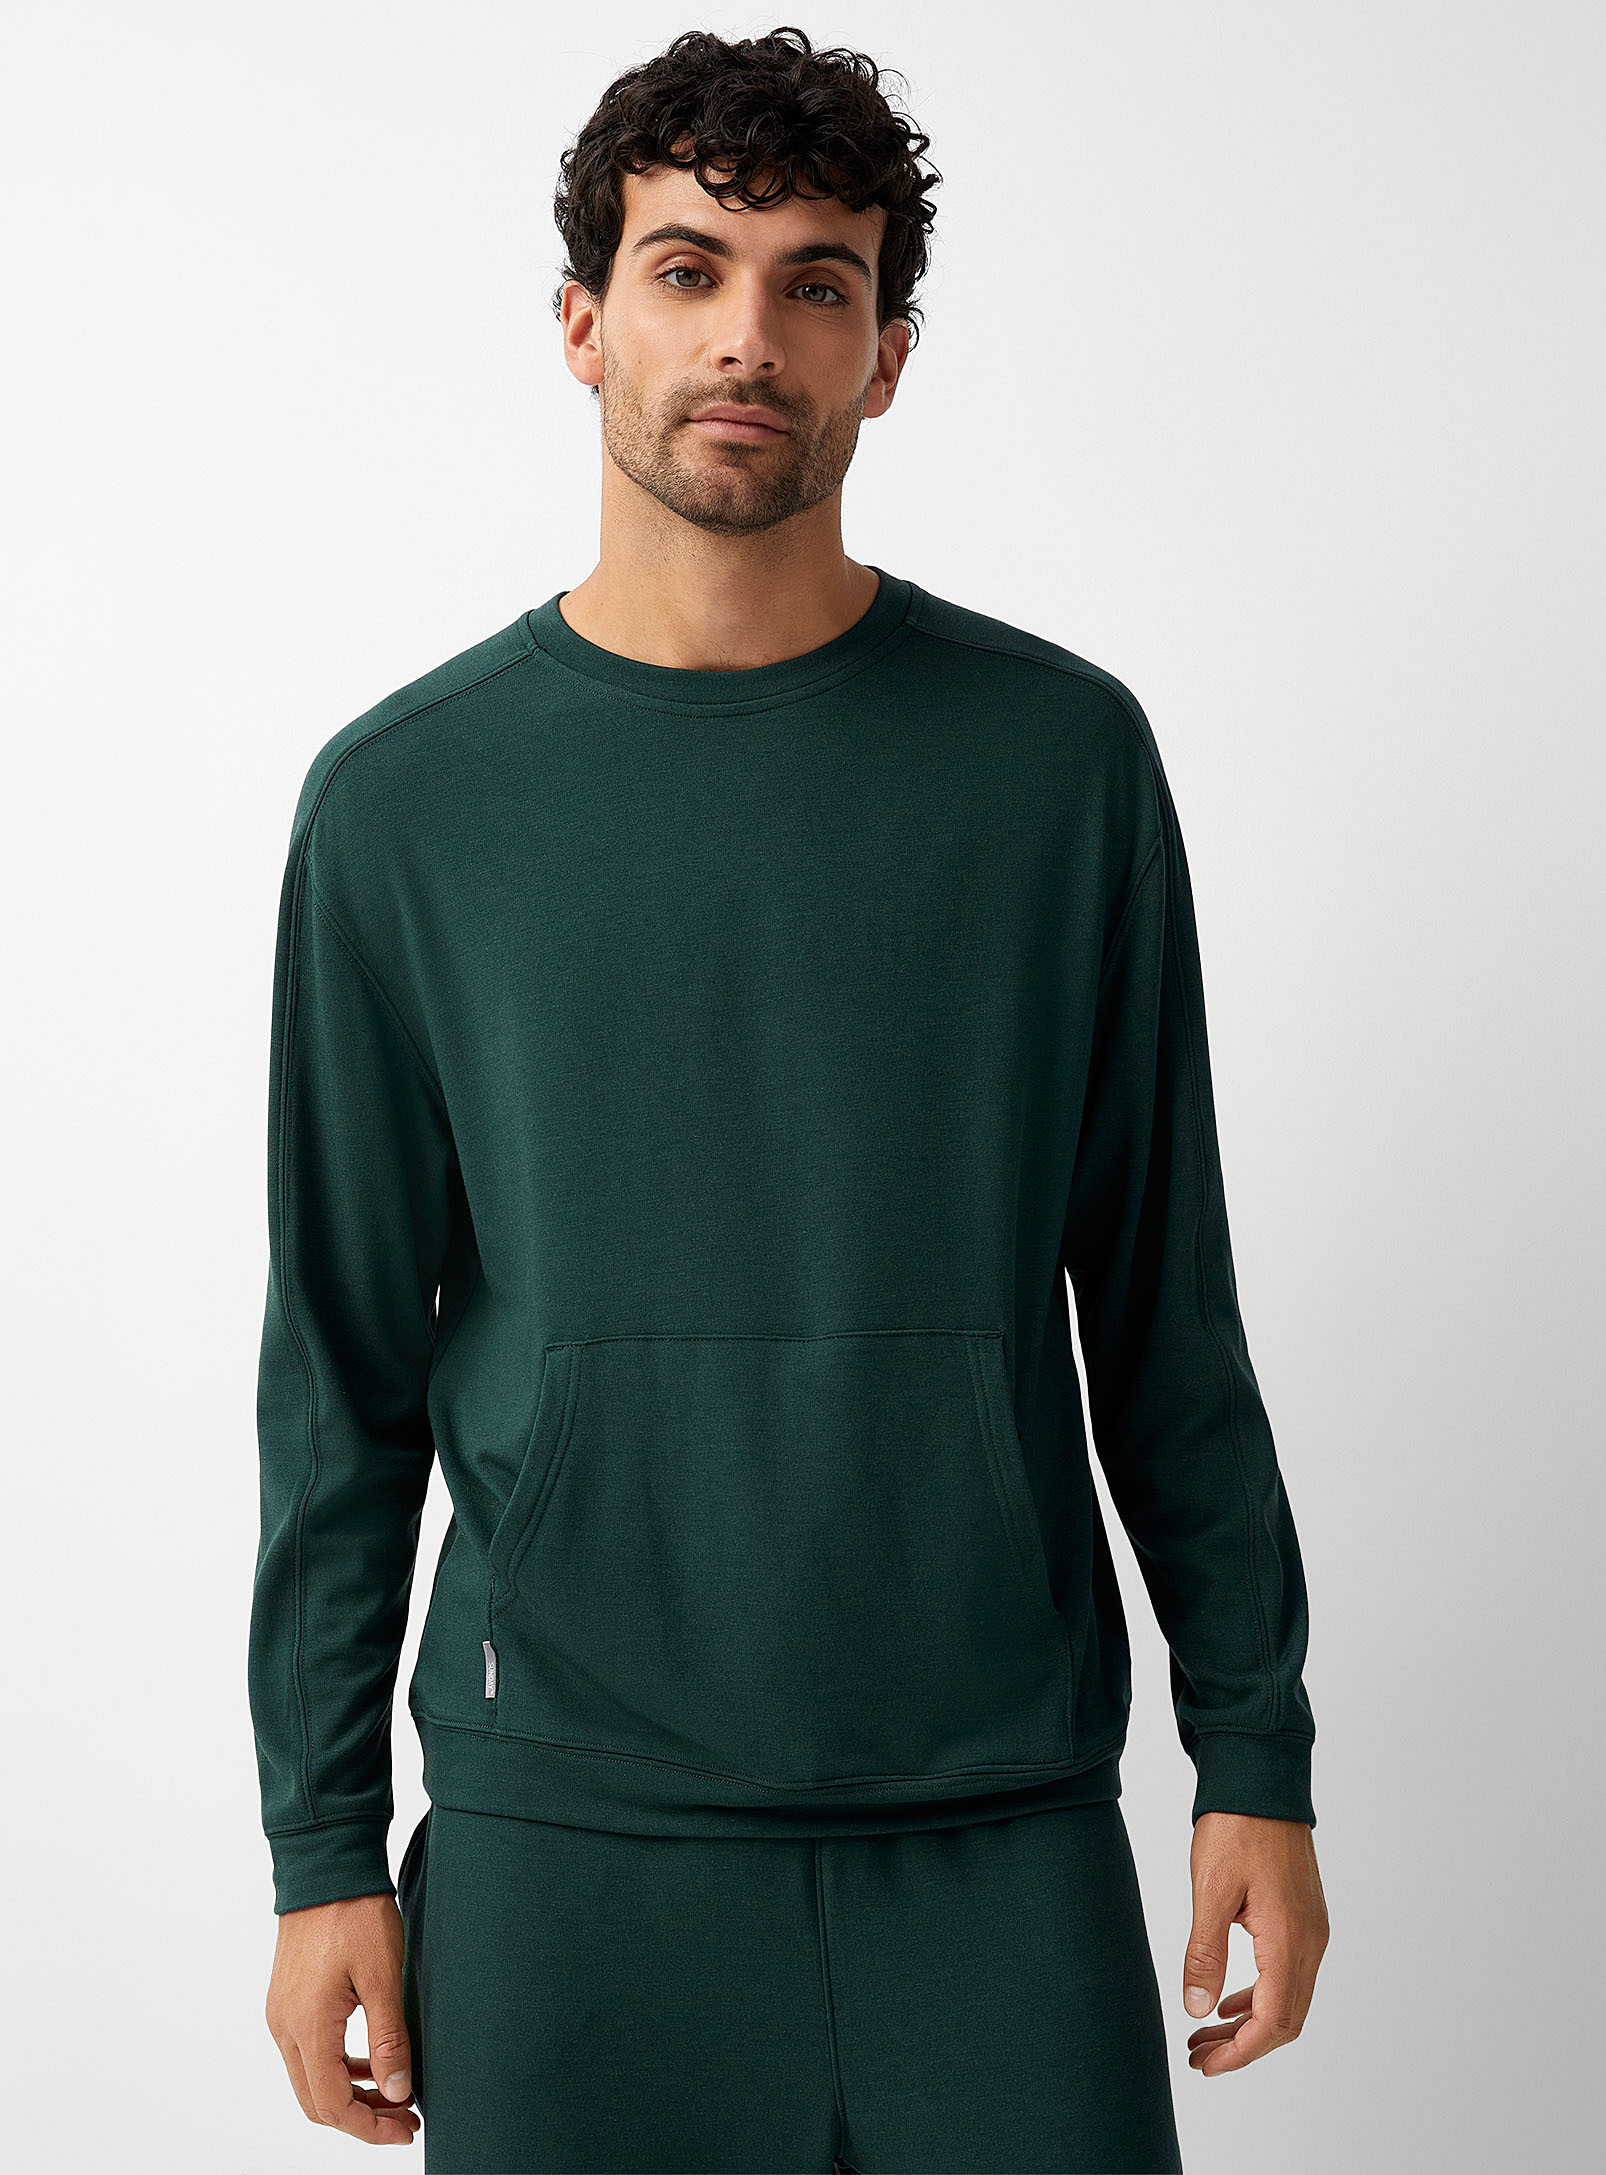 Everyday Sunday - Men's Forest-green viscose lounge sweatshirt